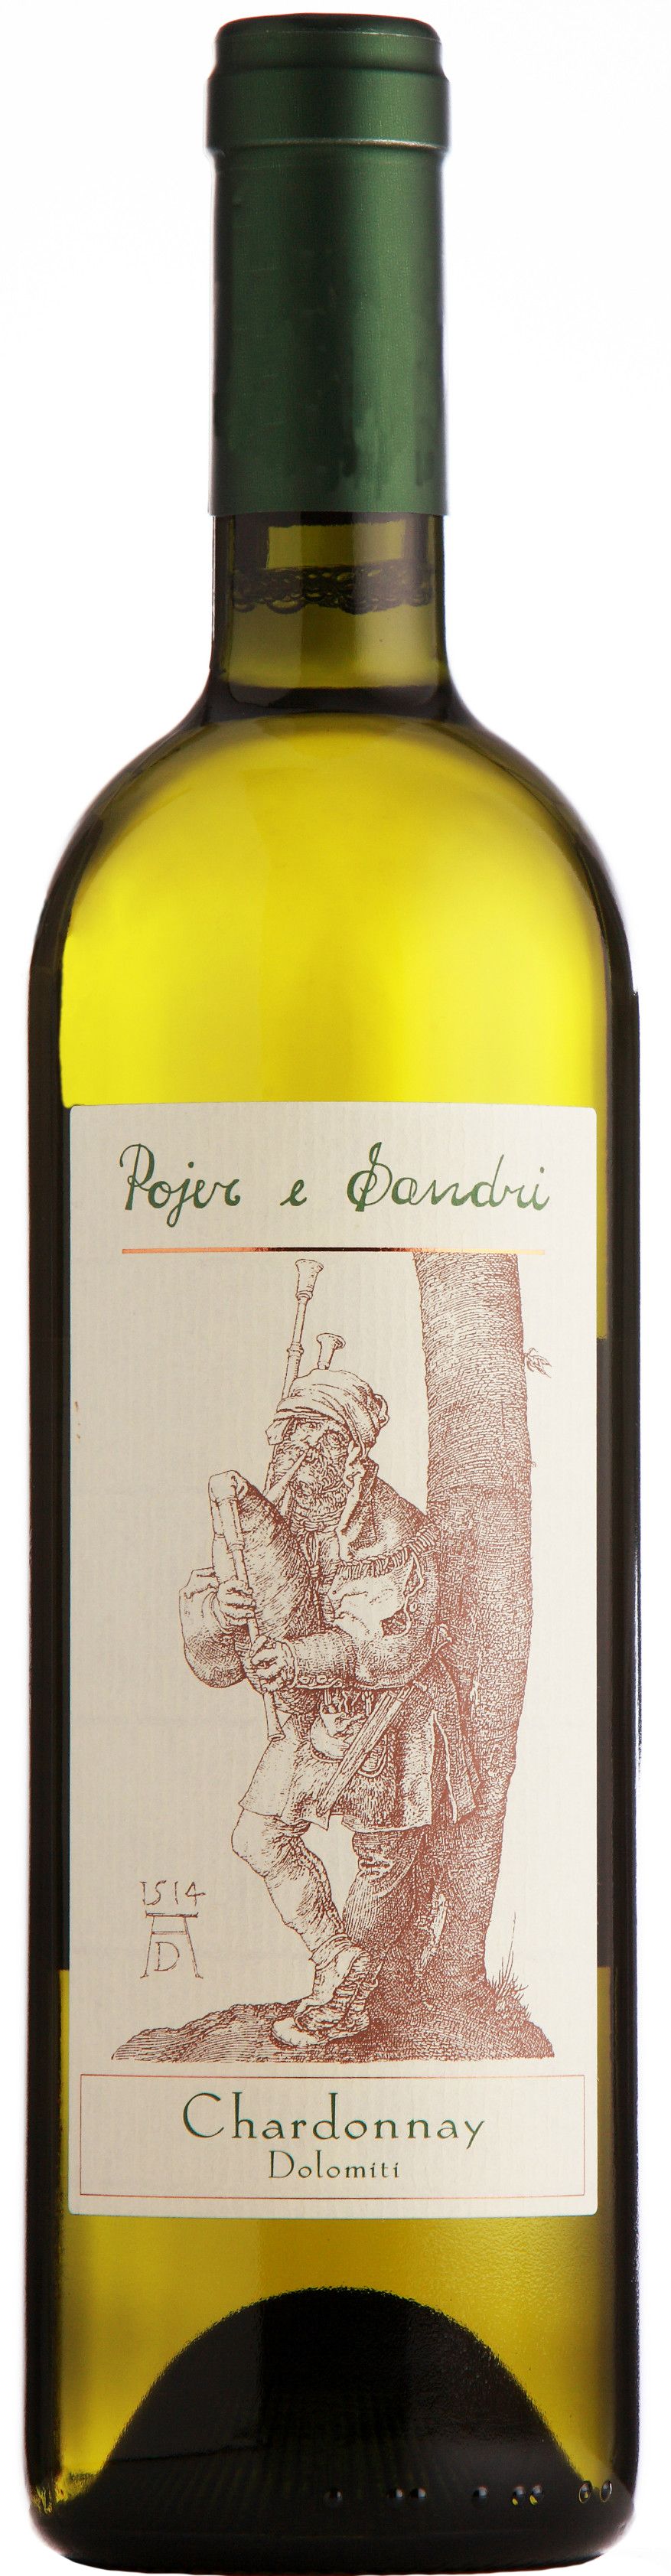 Pojer & Sandri, Chardonnay, 2012